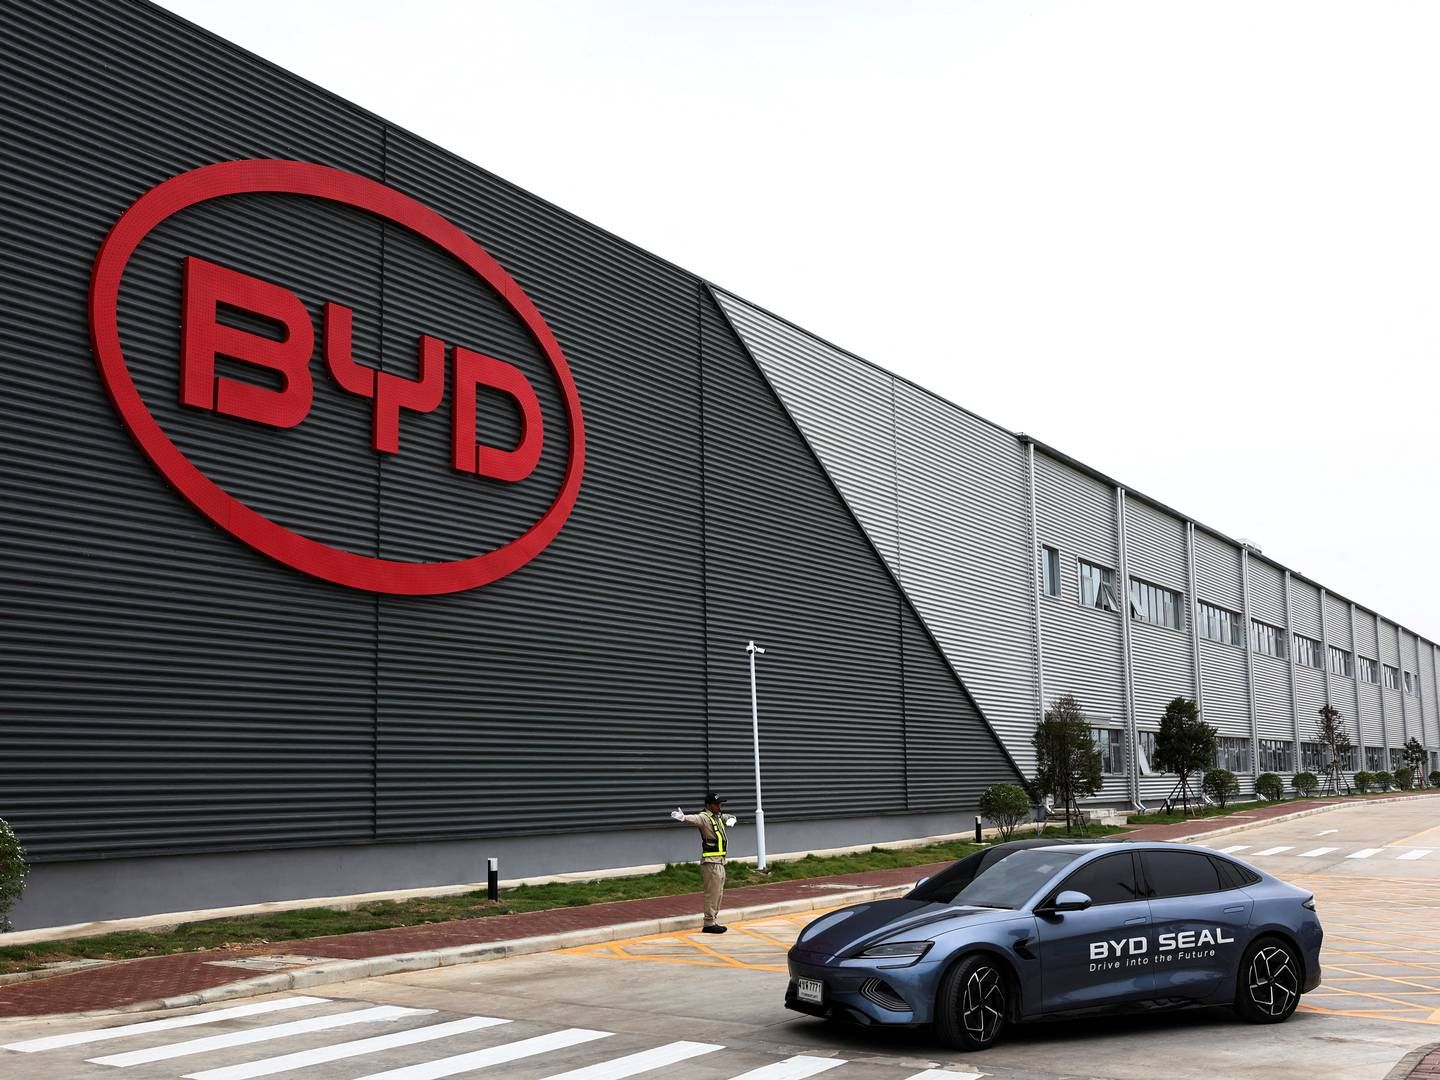 Fabrik, der fremstiller den kinesiske elbil BYD. | Foto: Chalinee Thirasupa